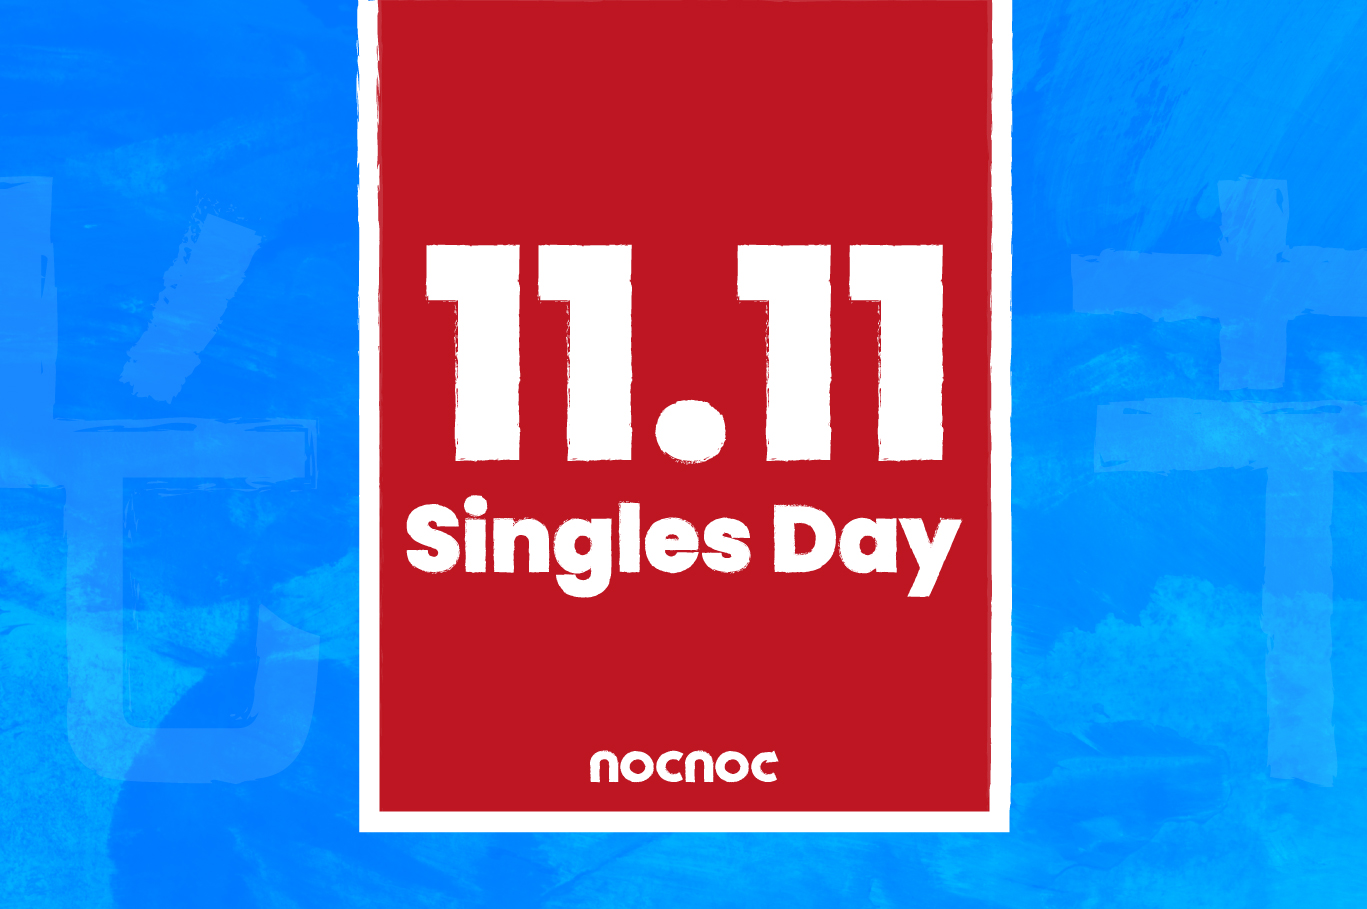 nocnoc web - singles day (1)